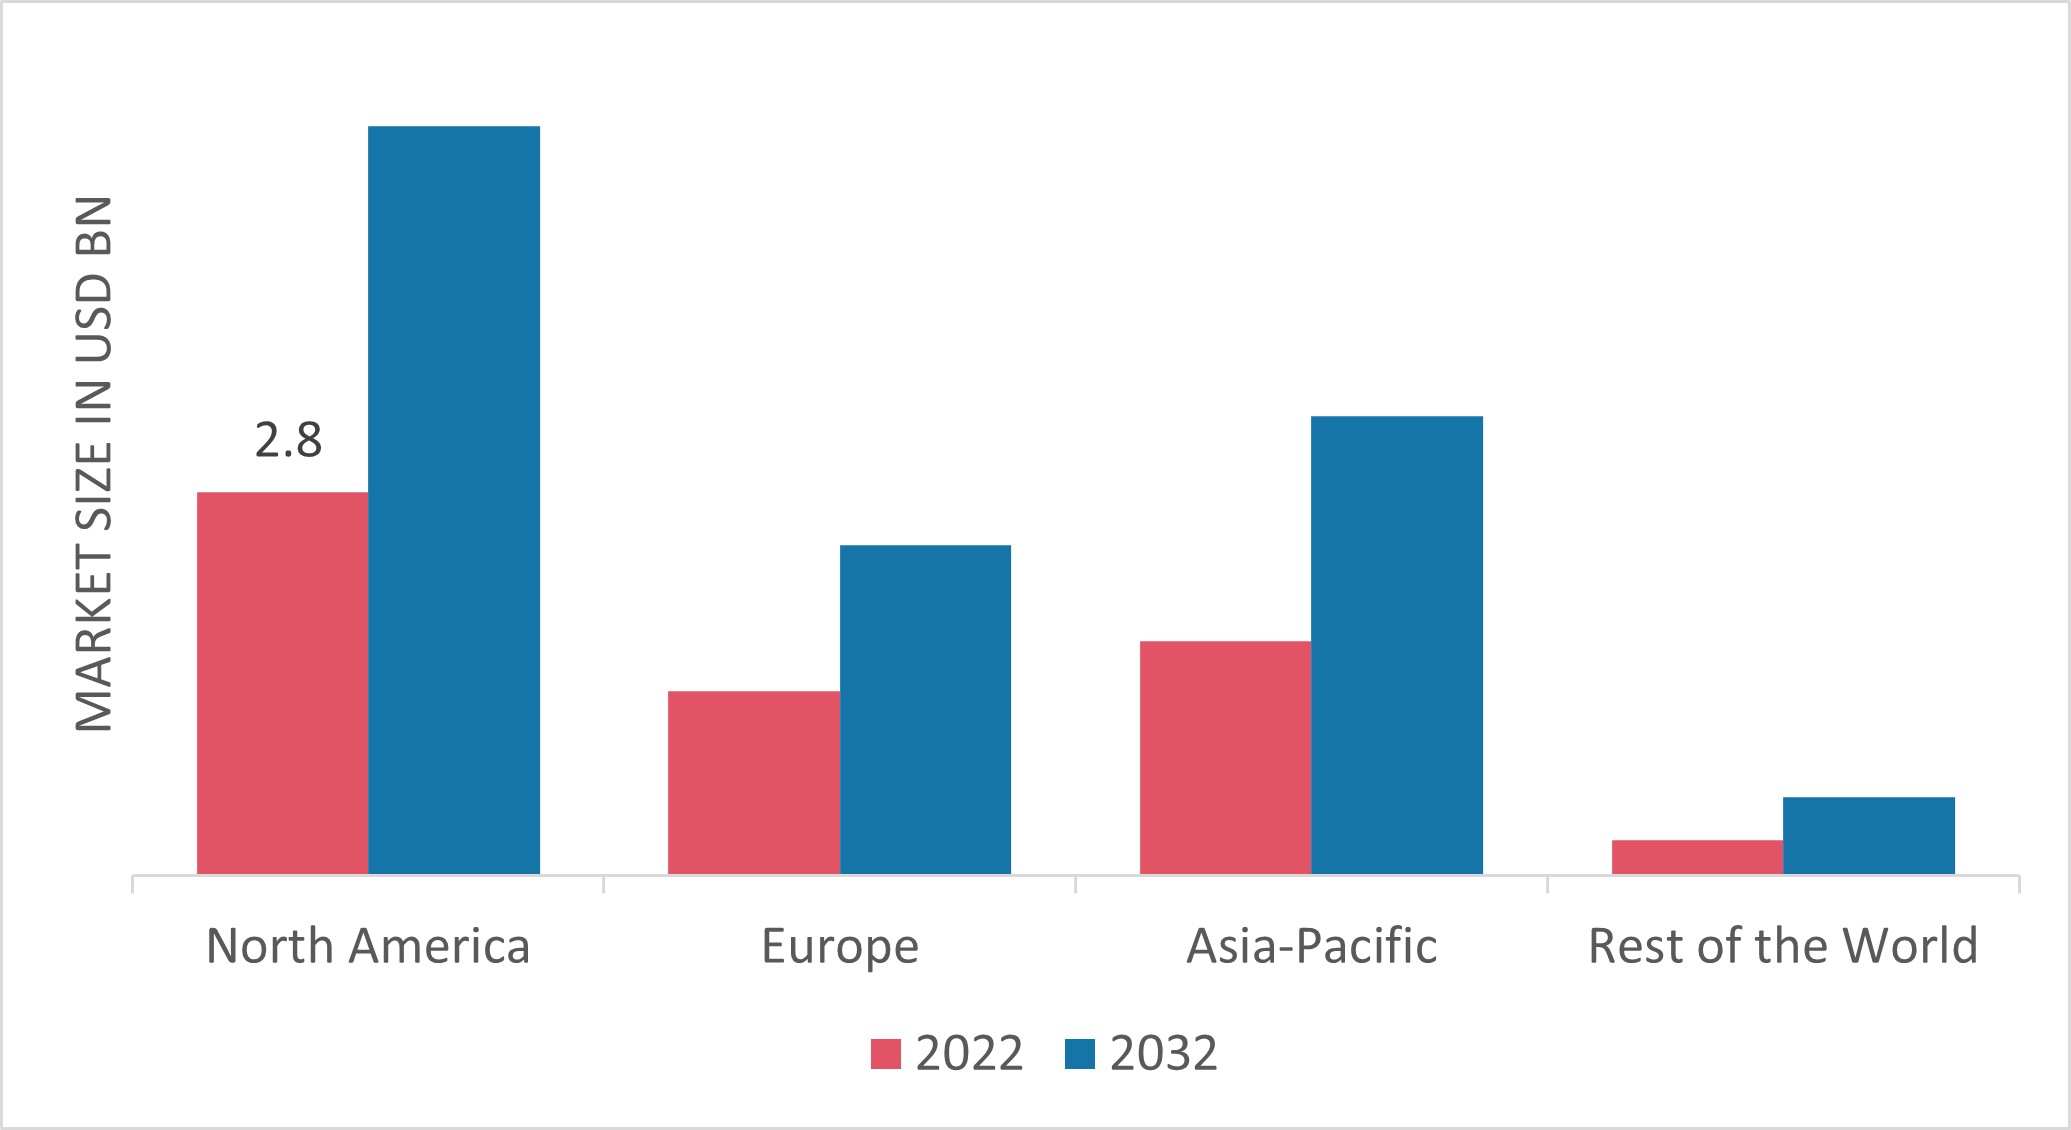 Liquid Roofing market share by Region 2022